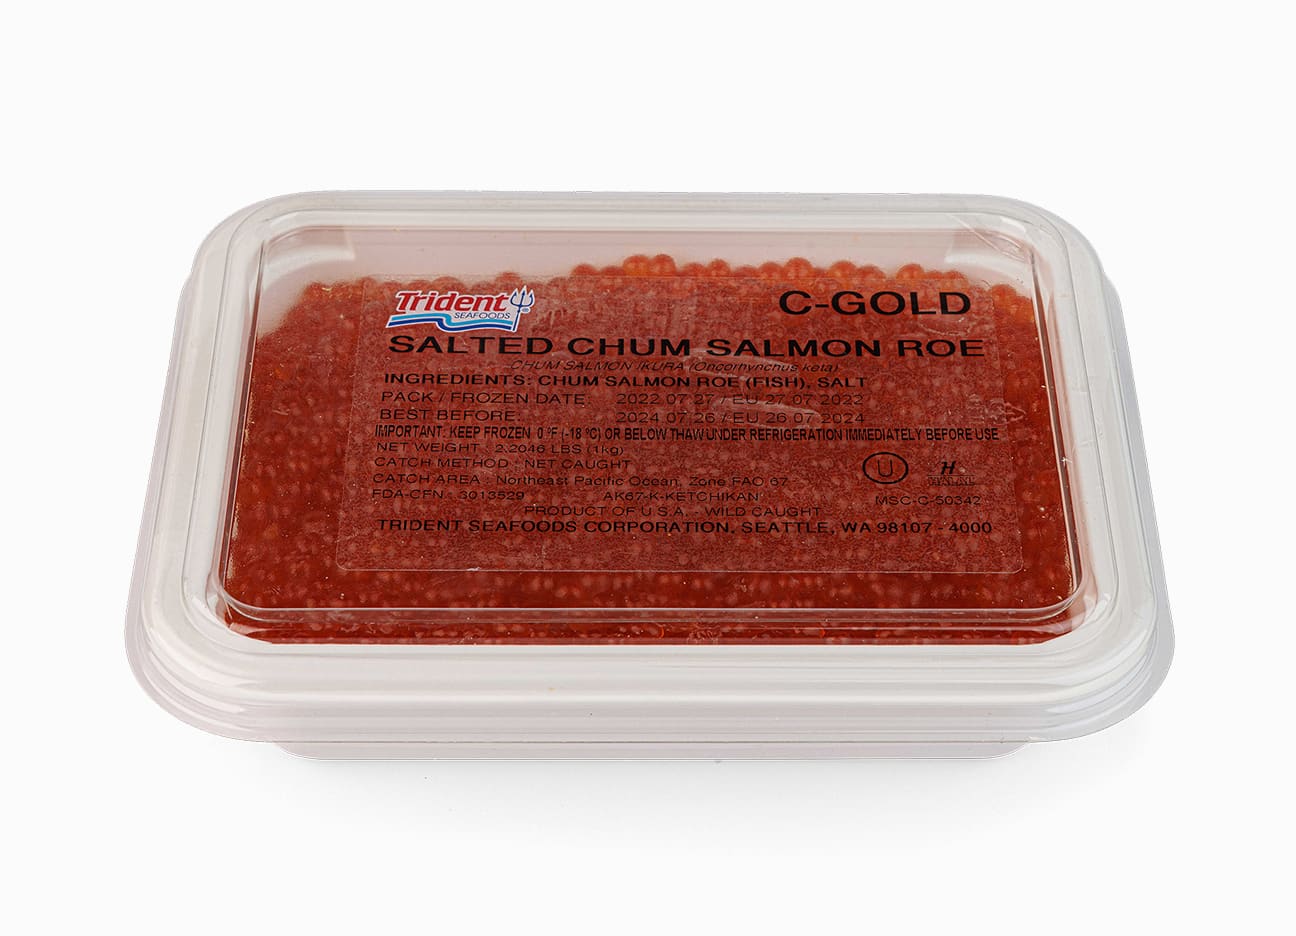 Wild Alaskan Chum Salmon Caviar Trident (C-Gold) 35.2 oz in a closed package.